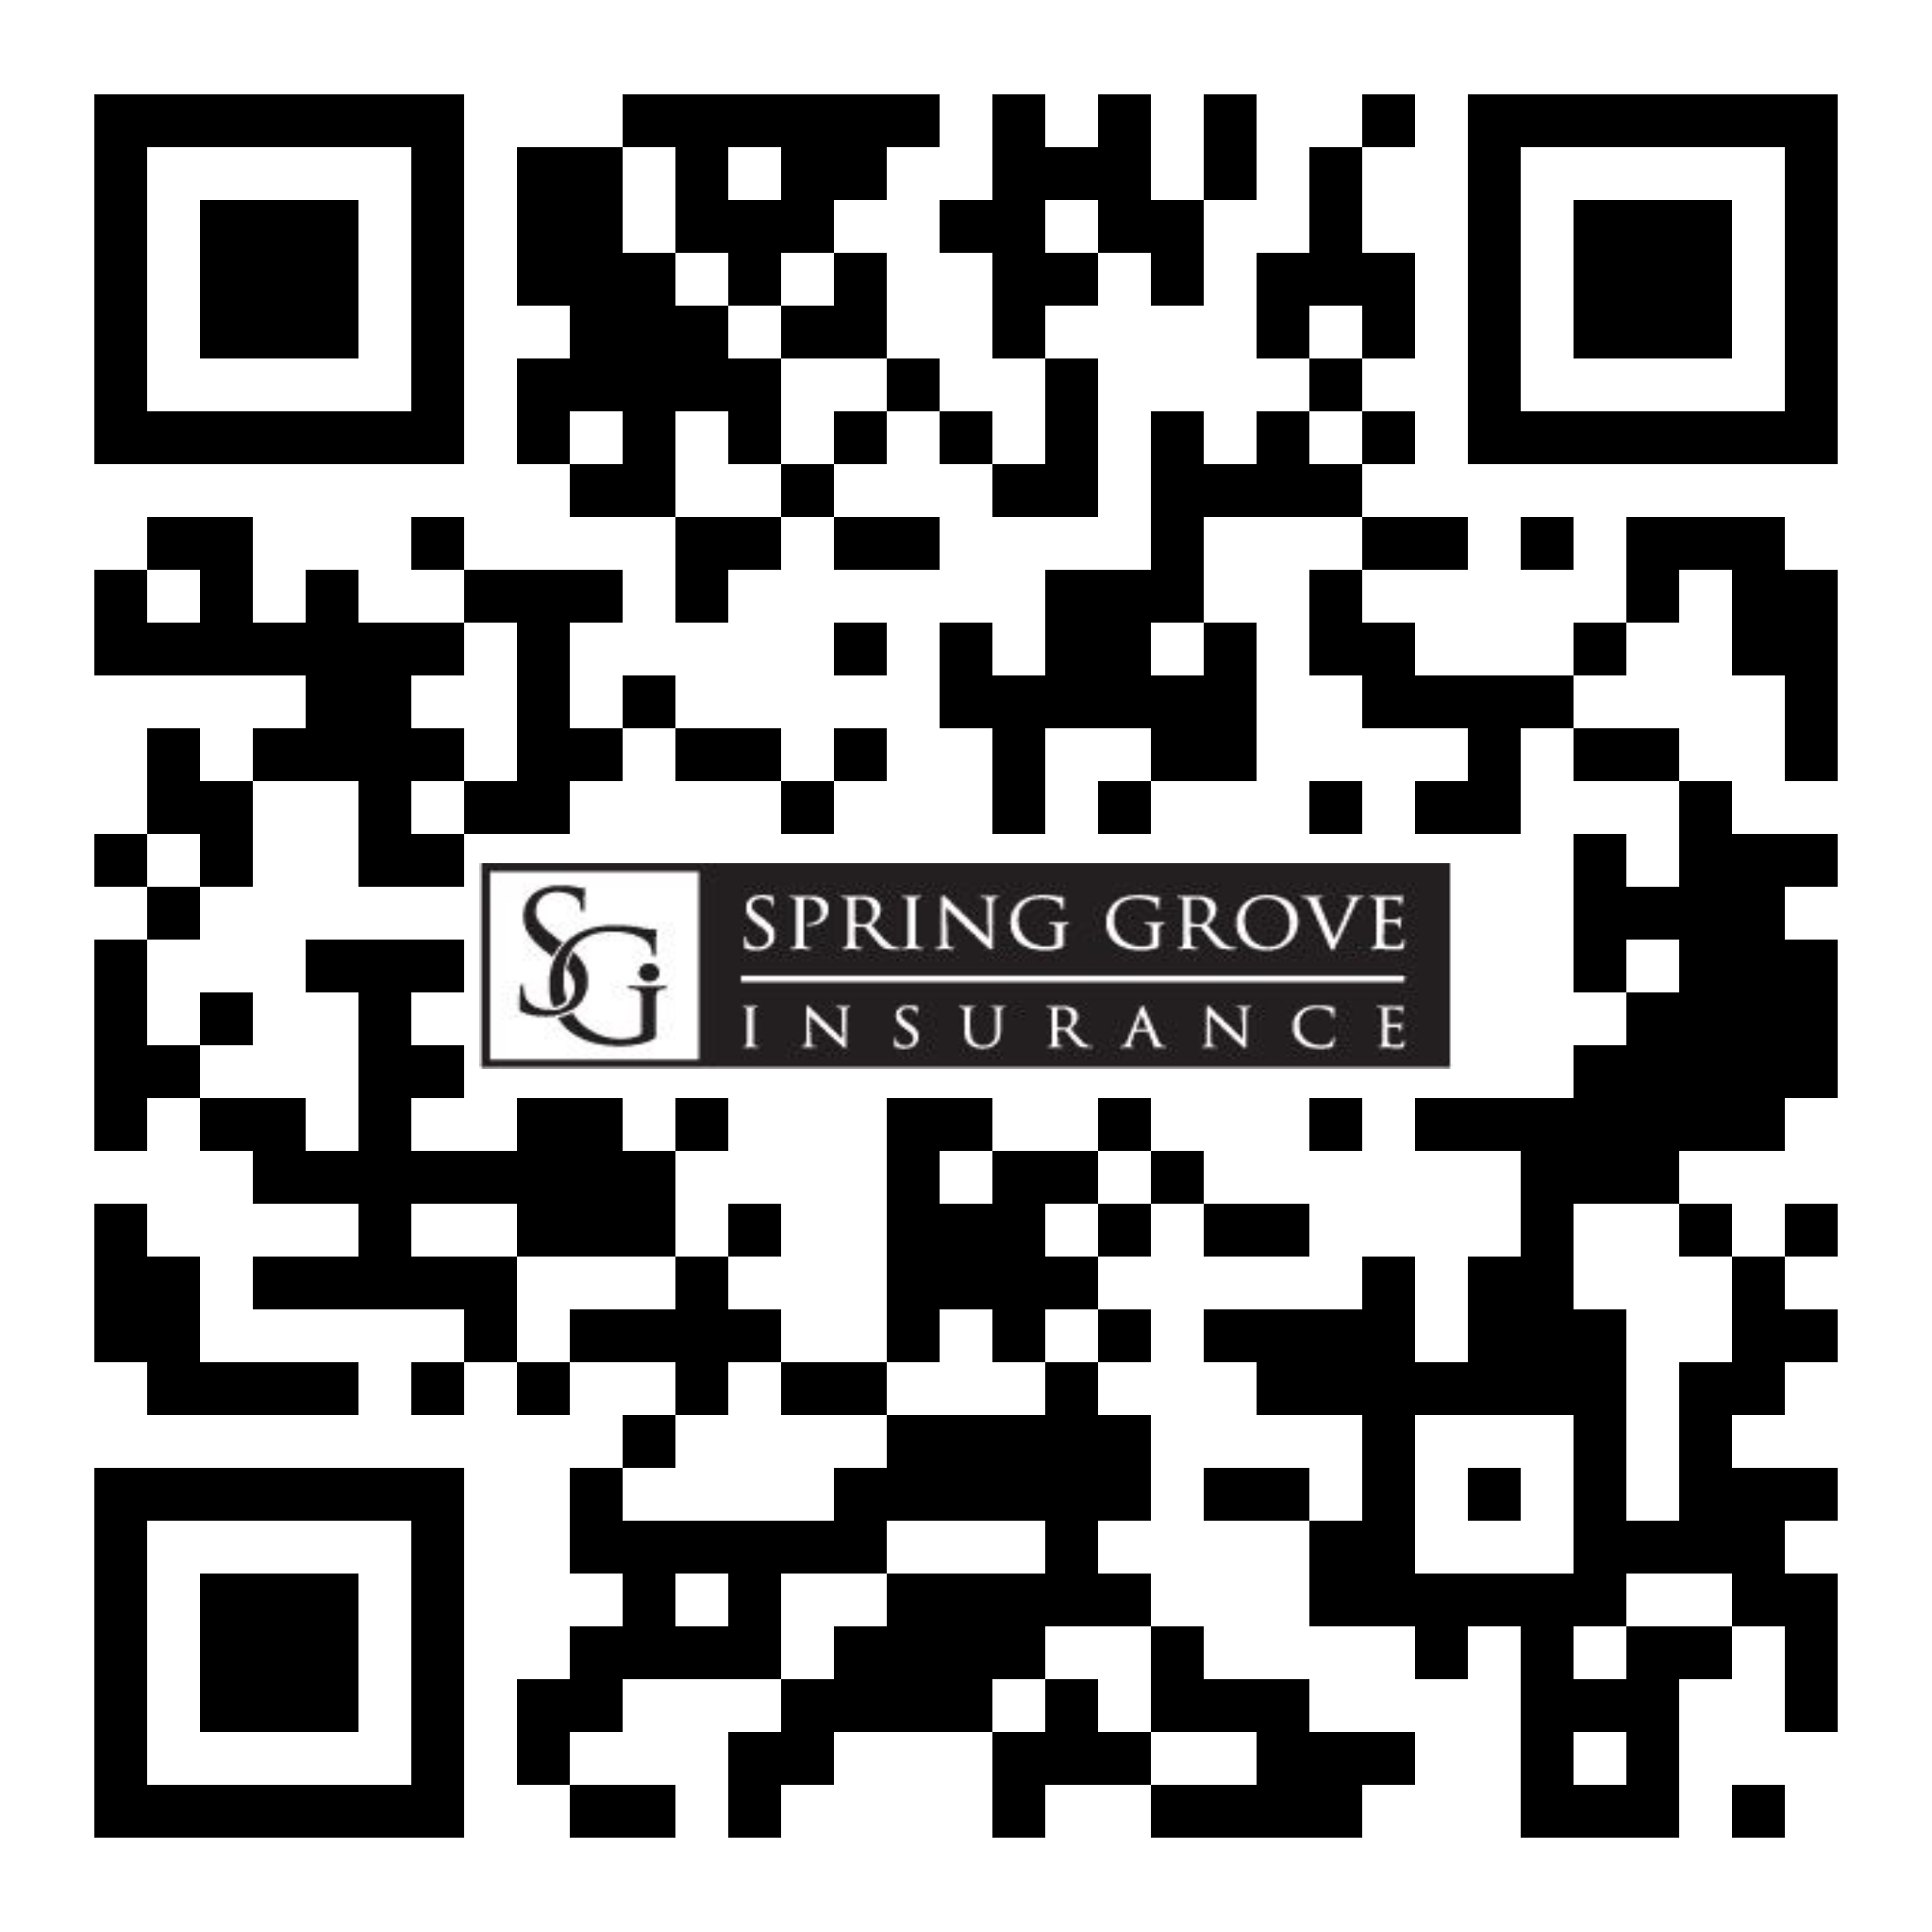 Spring Grove Insurance QR Code Image